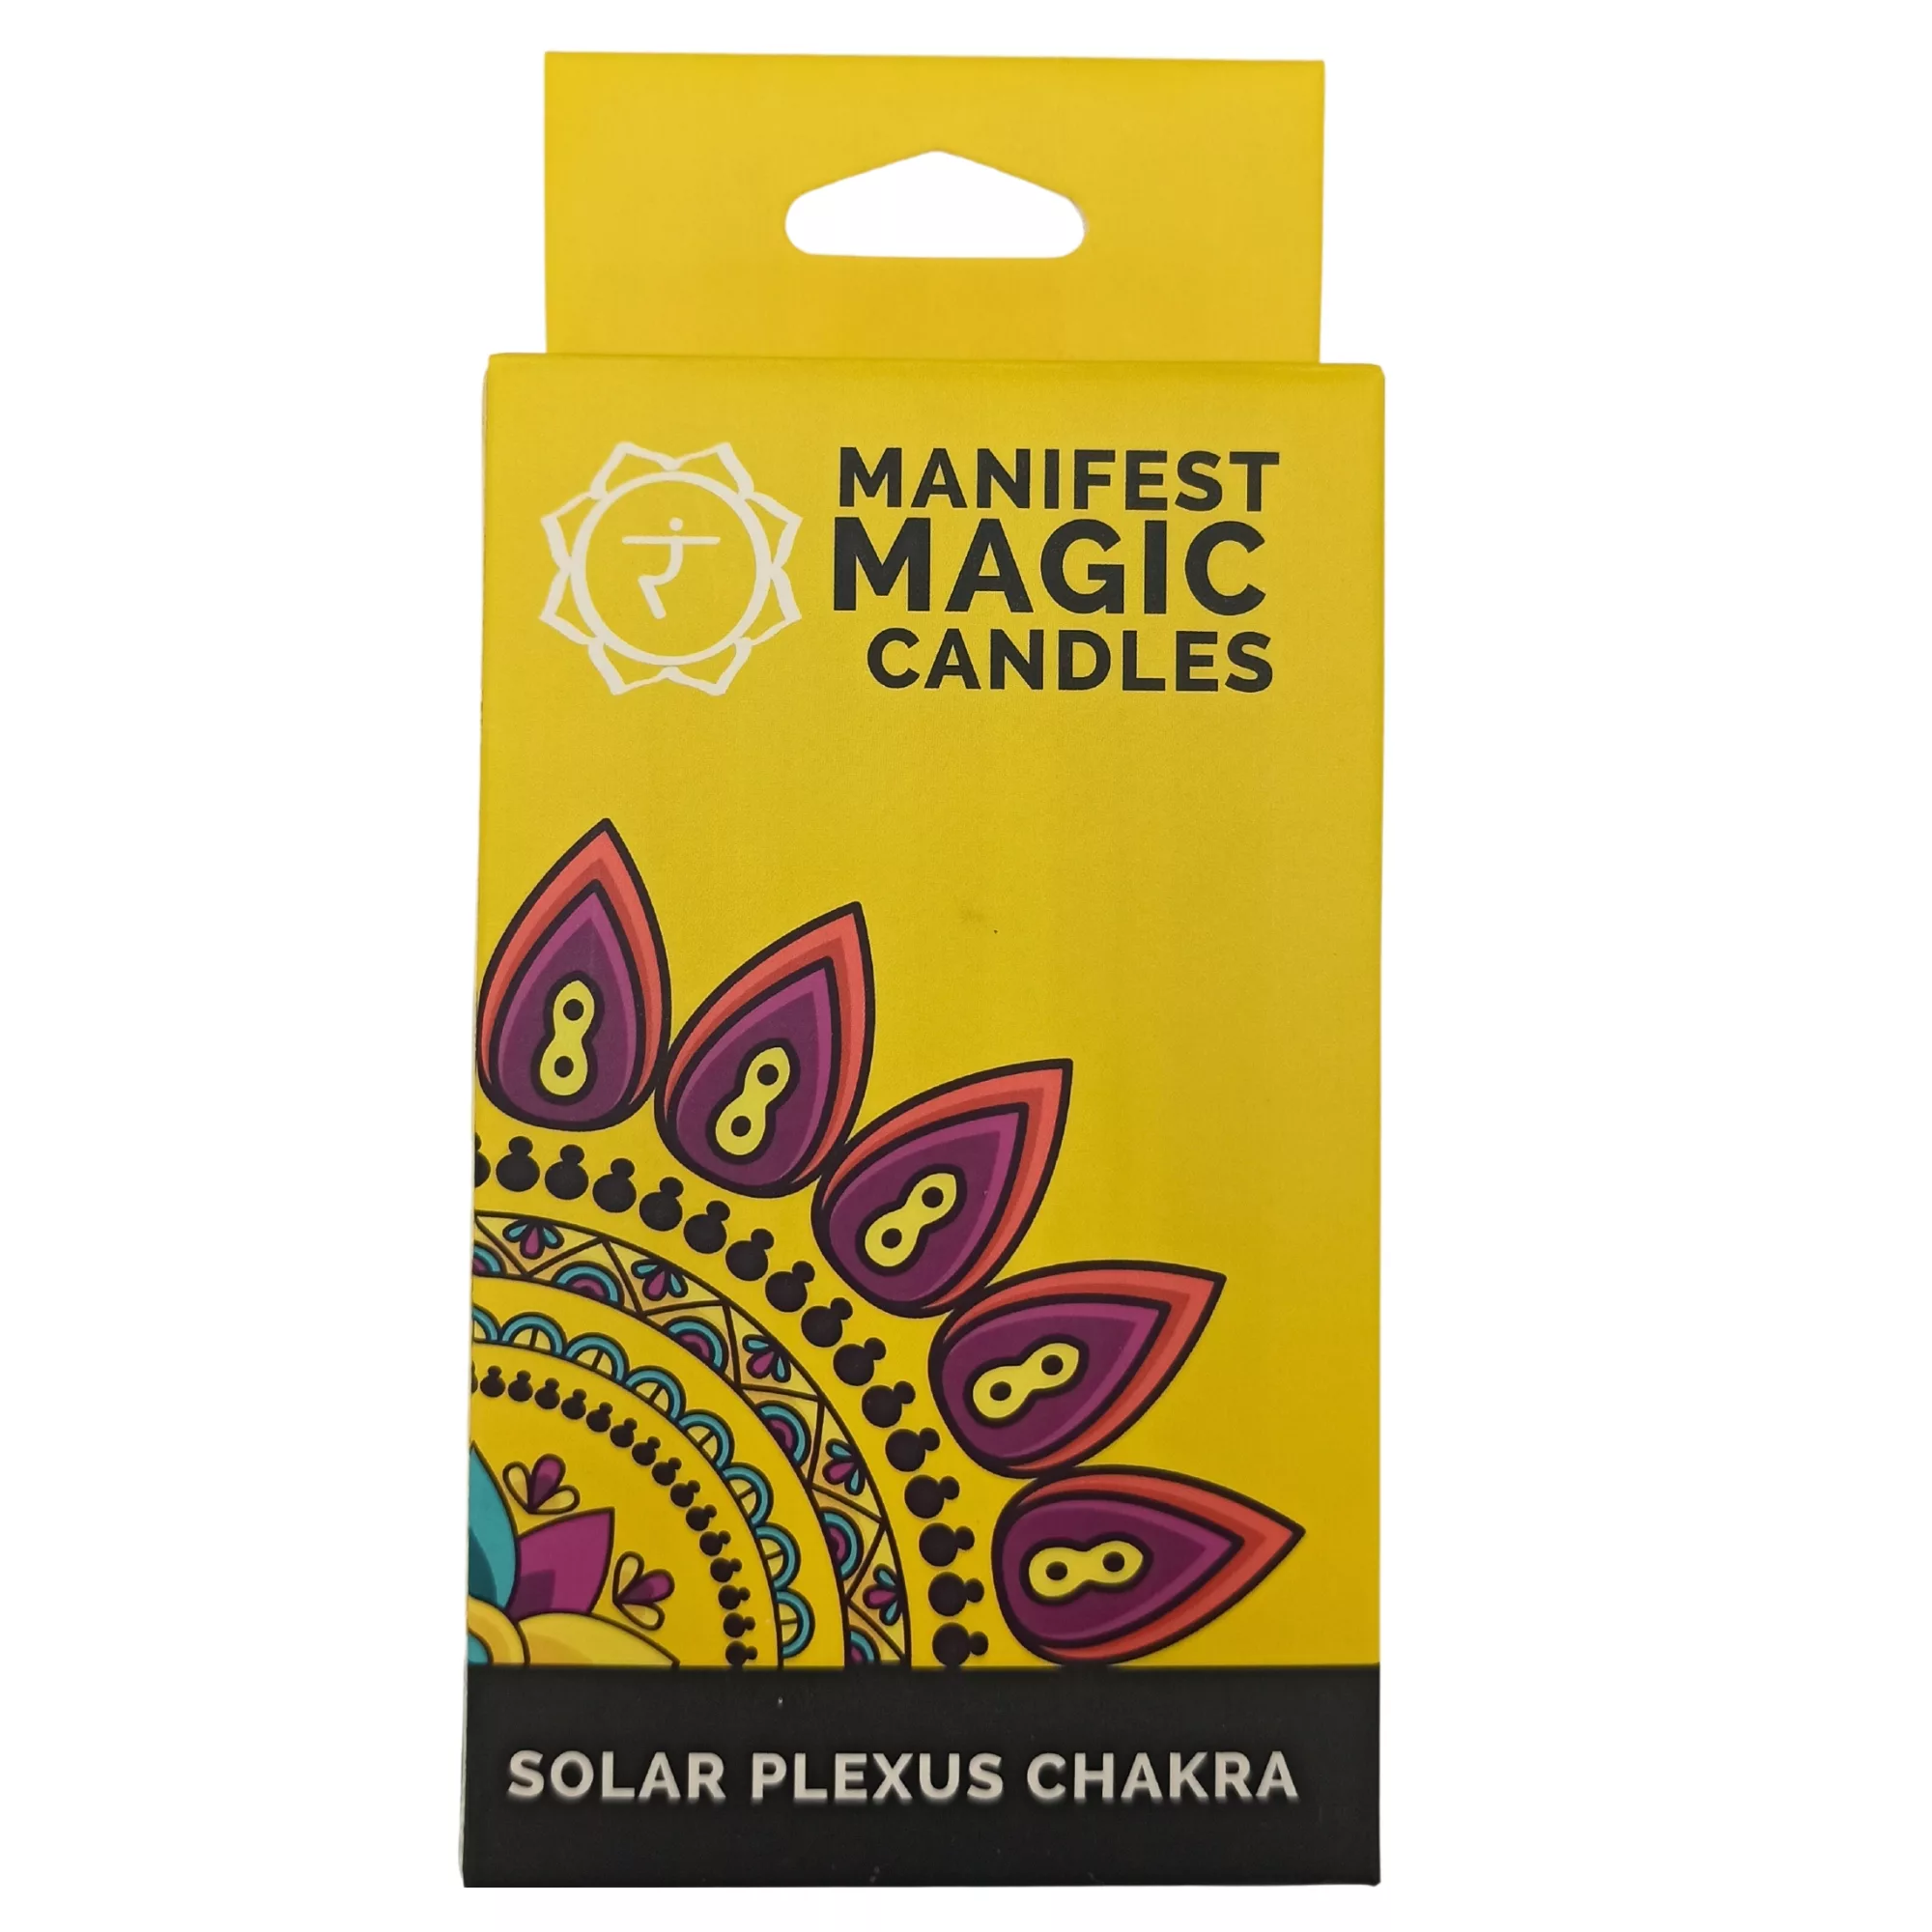 Manifest Magic Candles (pack of 12) – Yellow – Solar Plexus Chakra